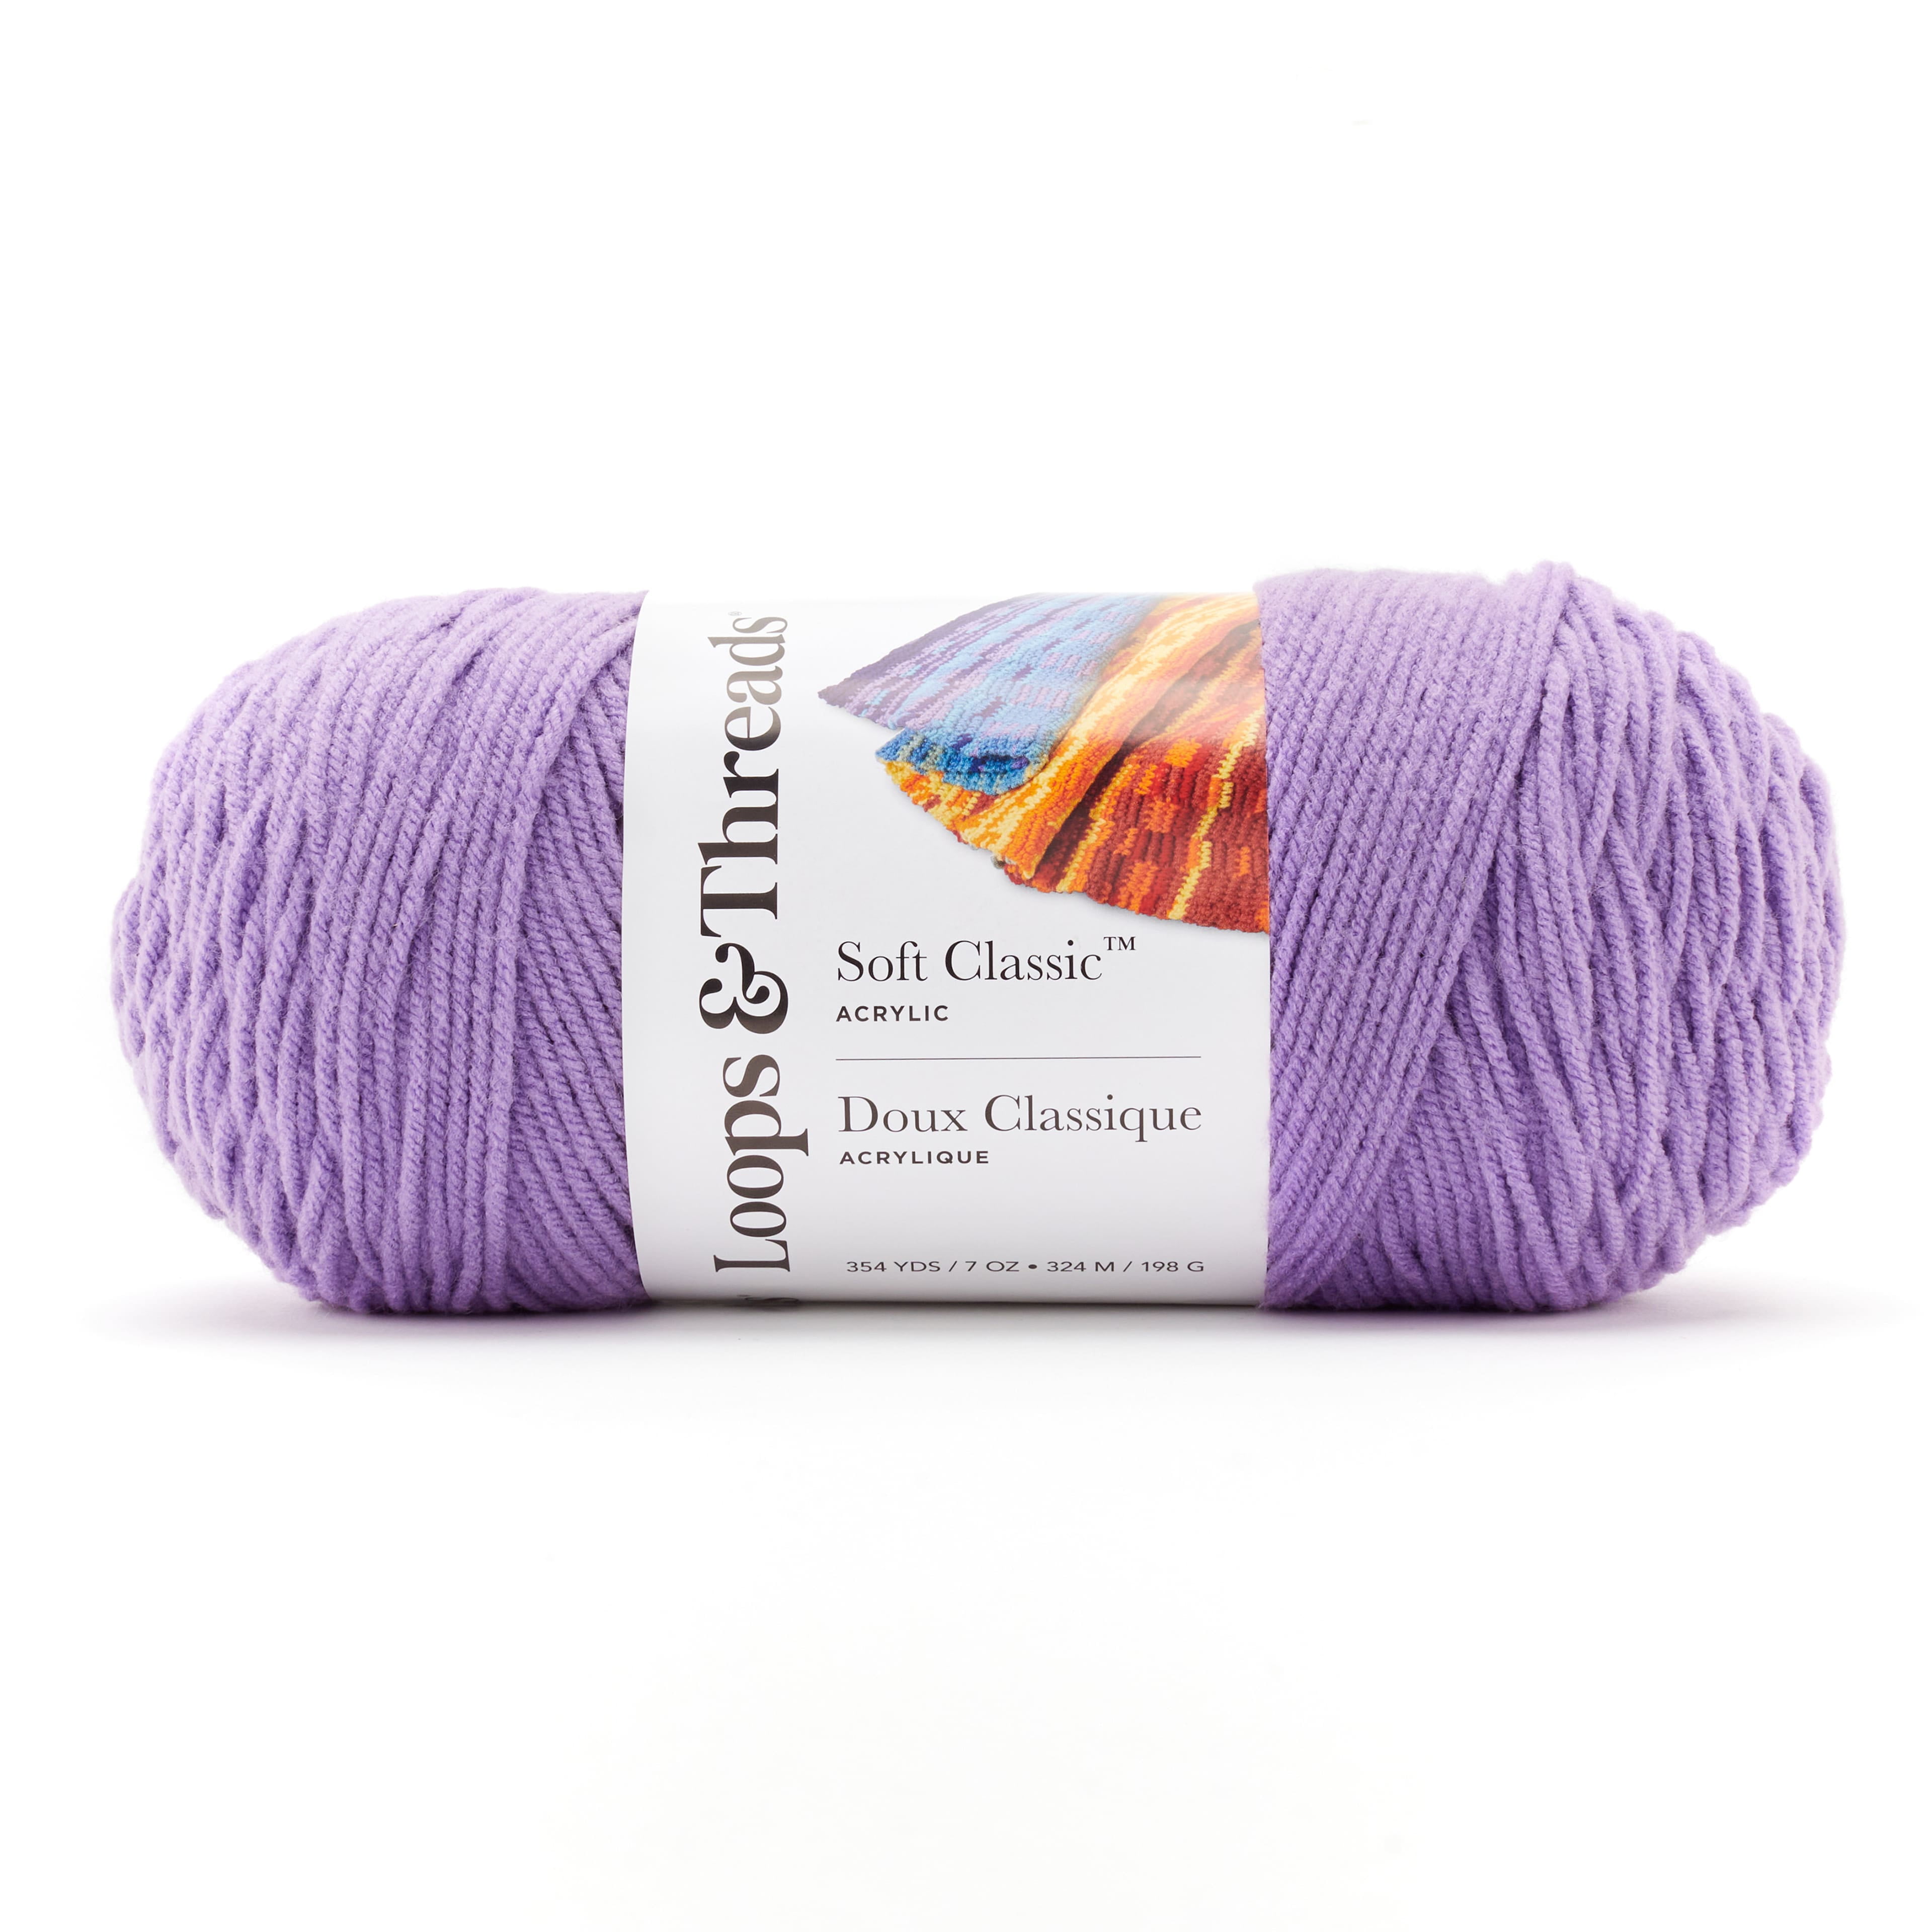 Shades of Purple Yarn Mini Cakes (4) 1oz 28g 100% Acrylic for Crafts,  Weaving, Knitting, Crochet Scrap Yarn Projects, Yarn Art Mixed lot 8A